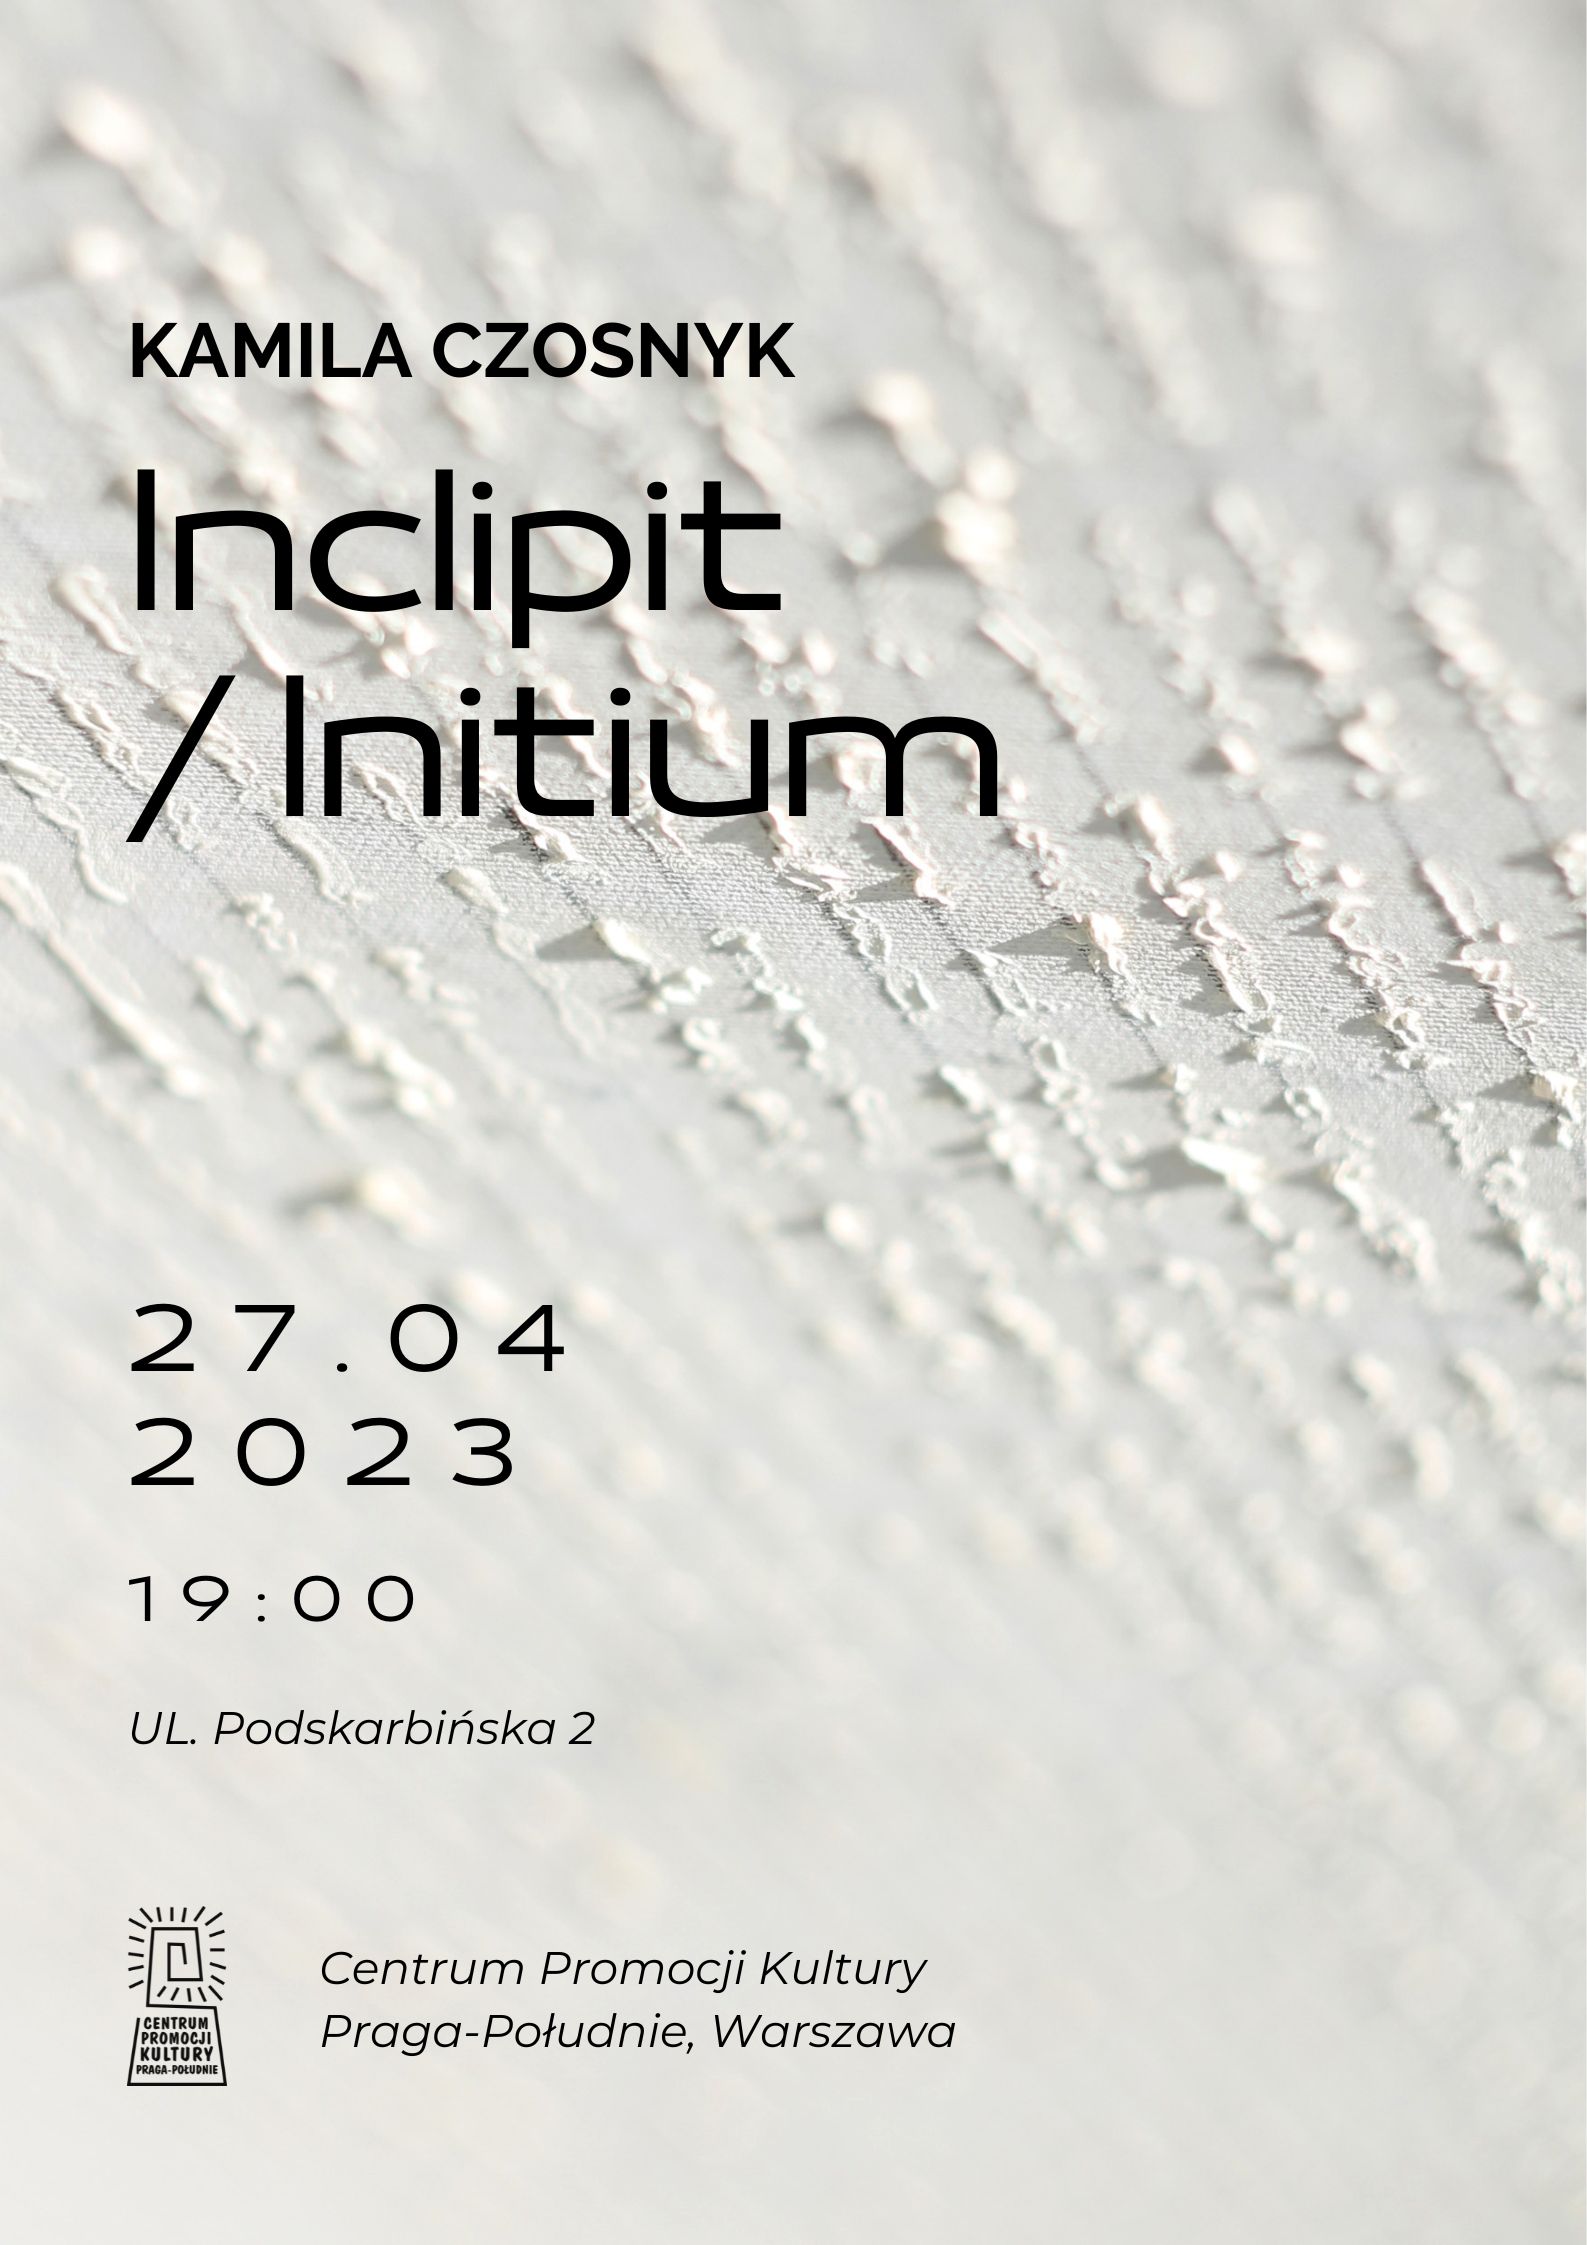 Wystawa „Inclipit / Initium” Kamili Czosnyk